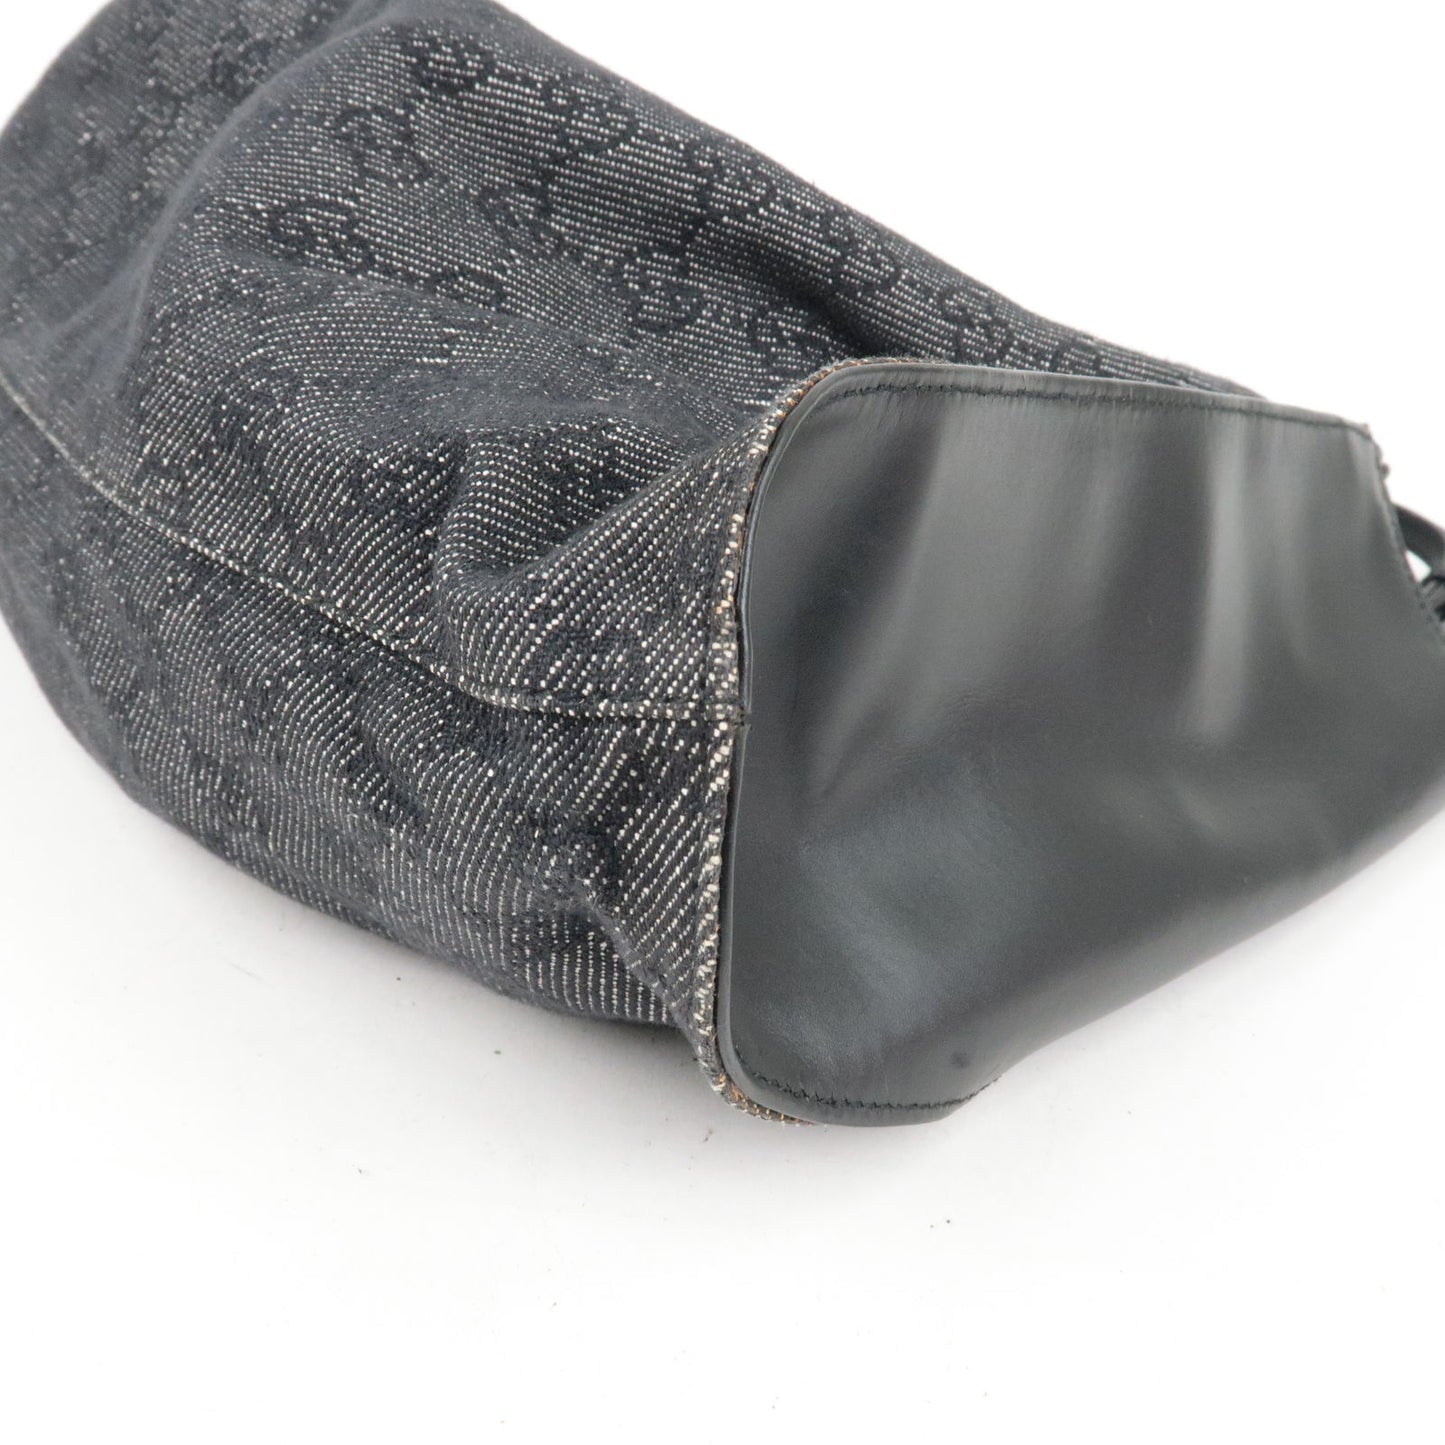 GUCCI GG Canvas Leather Hand Bag Purse Black 76554